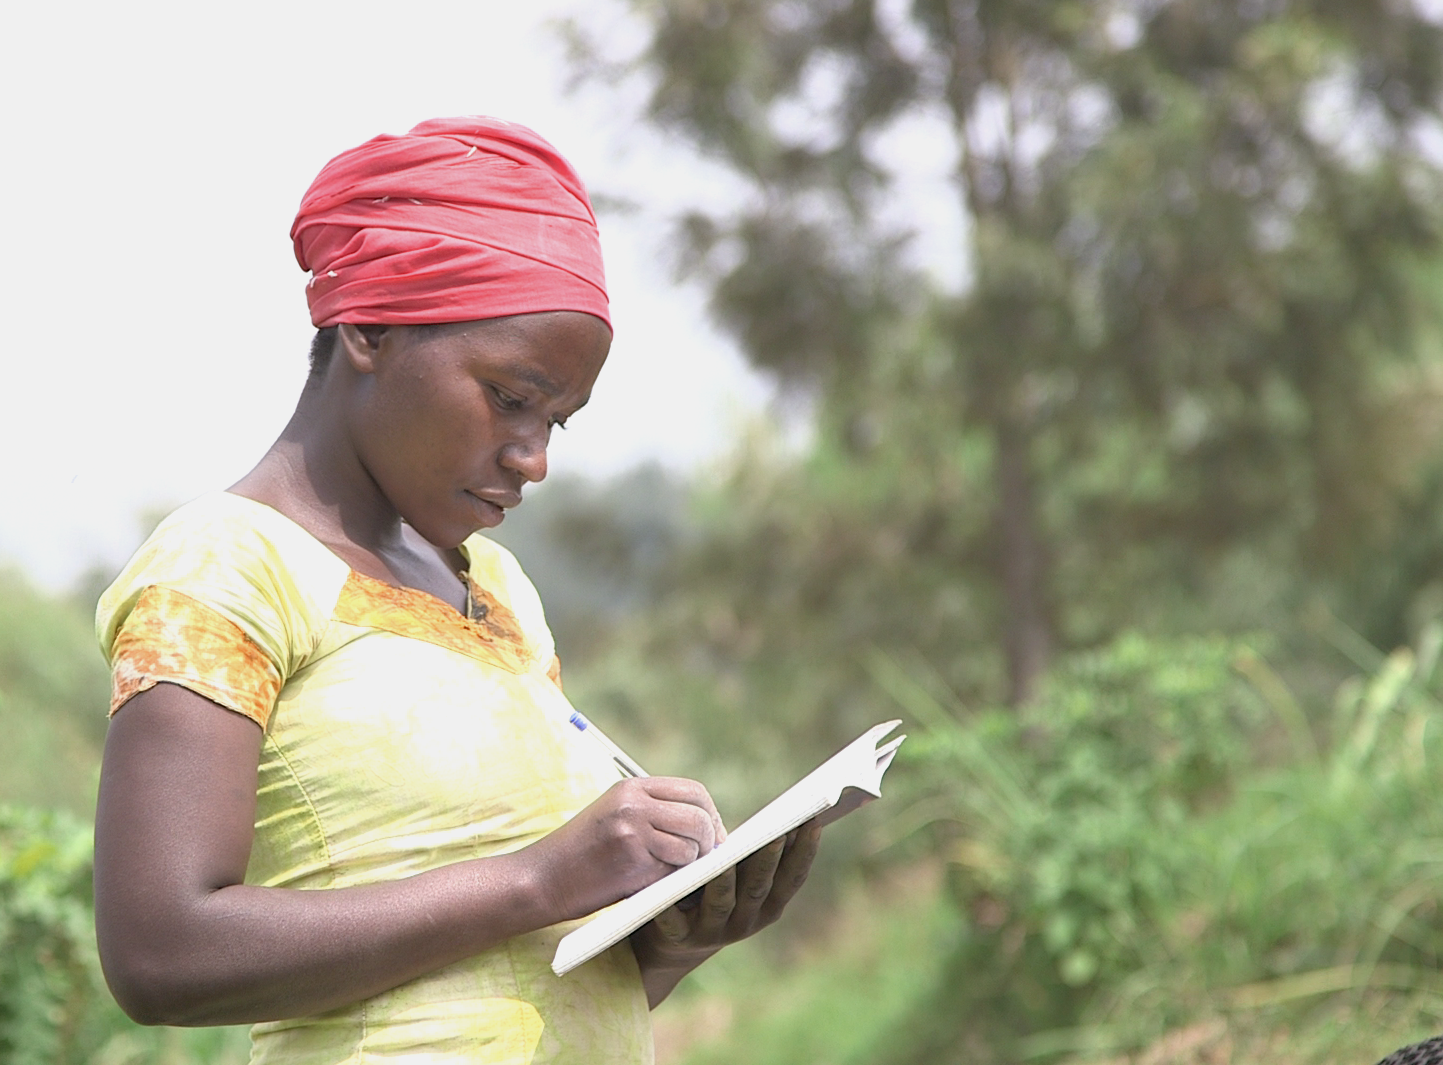 In Rwanda, women are becoming leaders in what were once male-dominated professions. Here Jacqueline Mukamunana, secretary of the Duteraninkunga cassava cooperative, takes attendance. Image by Cammie Behnke. Rwanda, 2018.